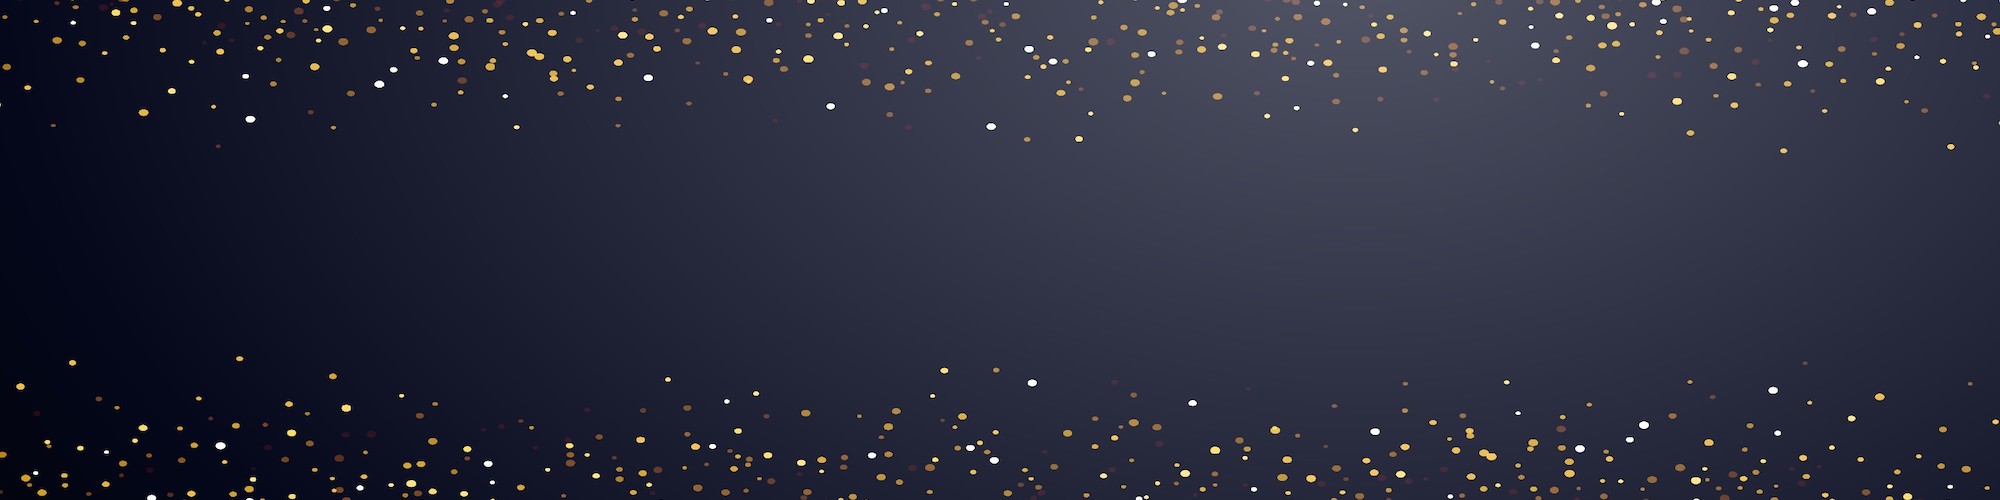 Black-Sparkle-Glitter-Background